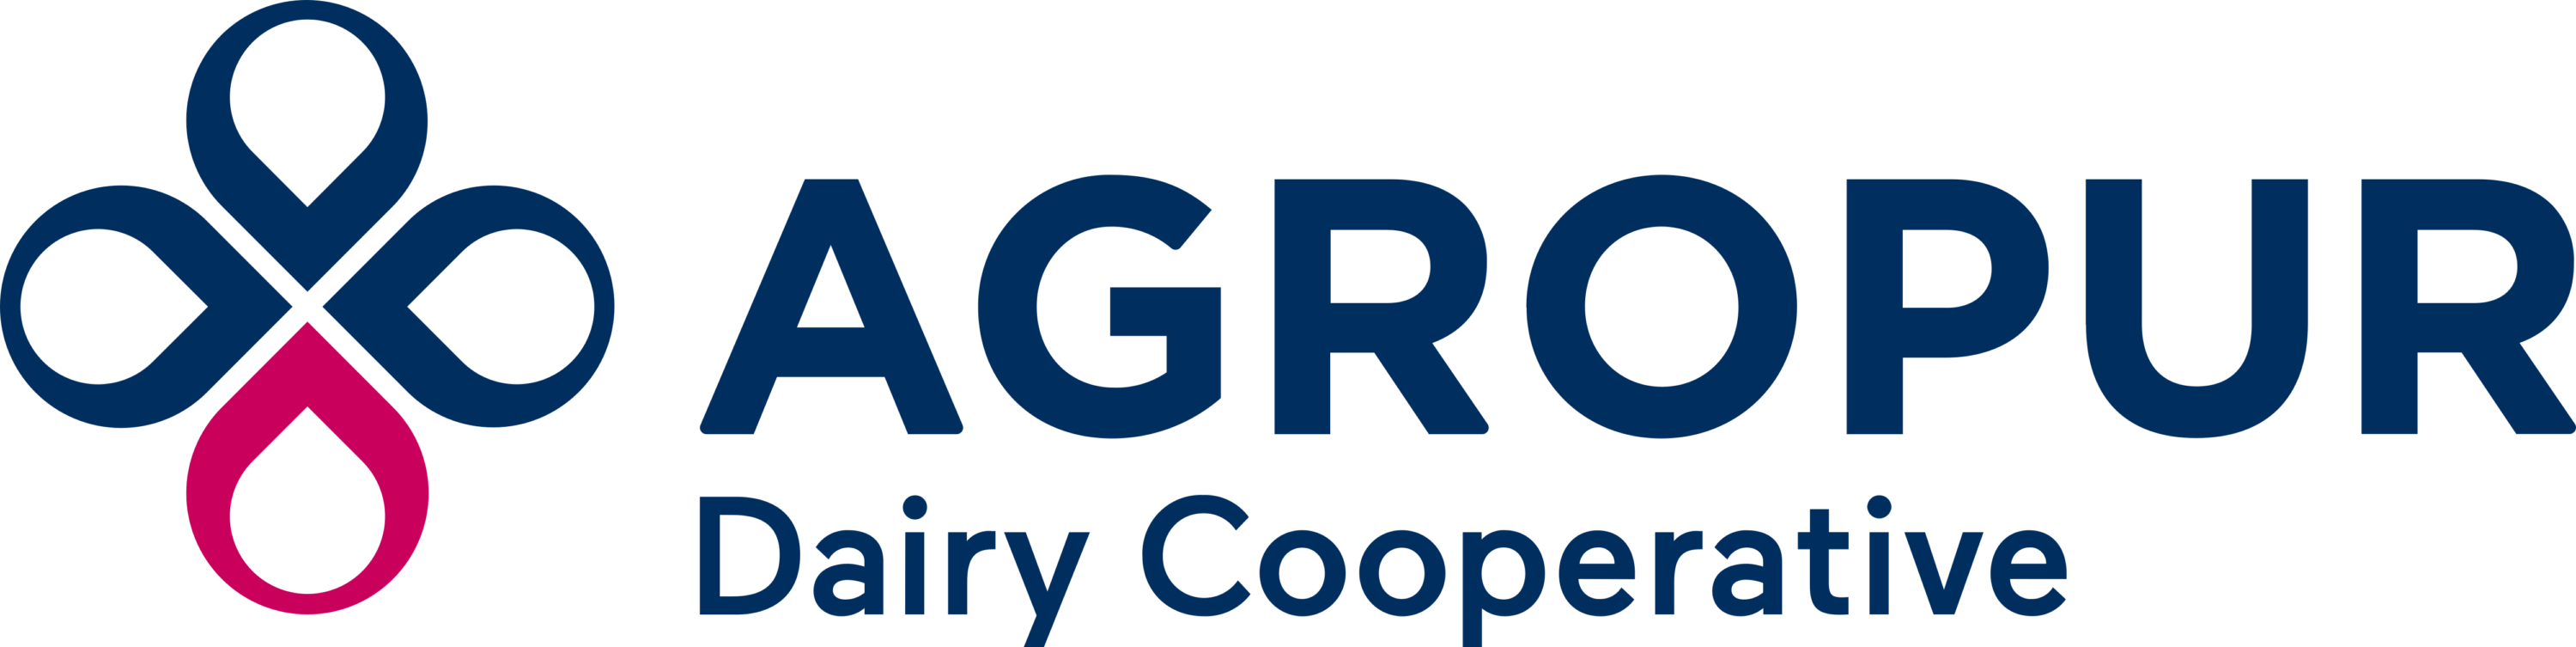 Agropur Logo